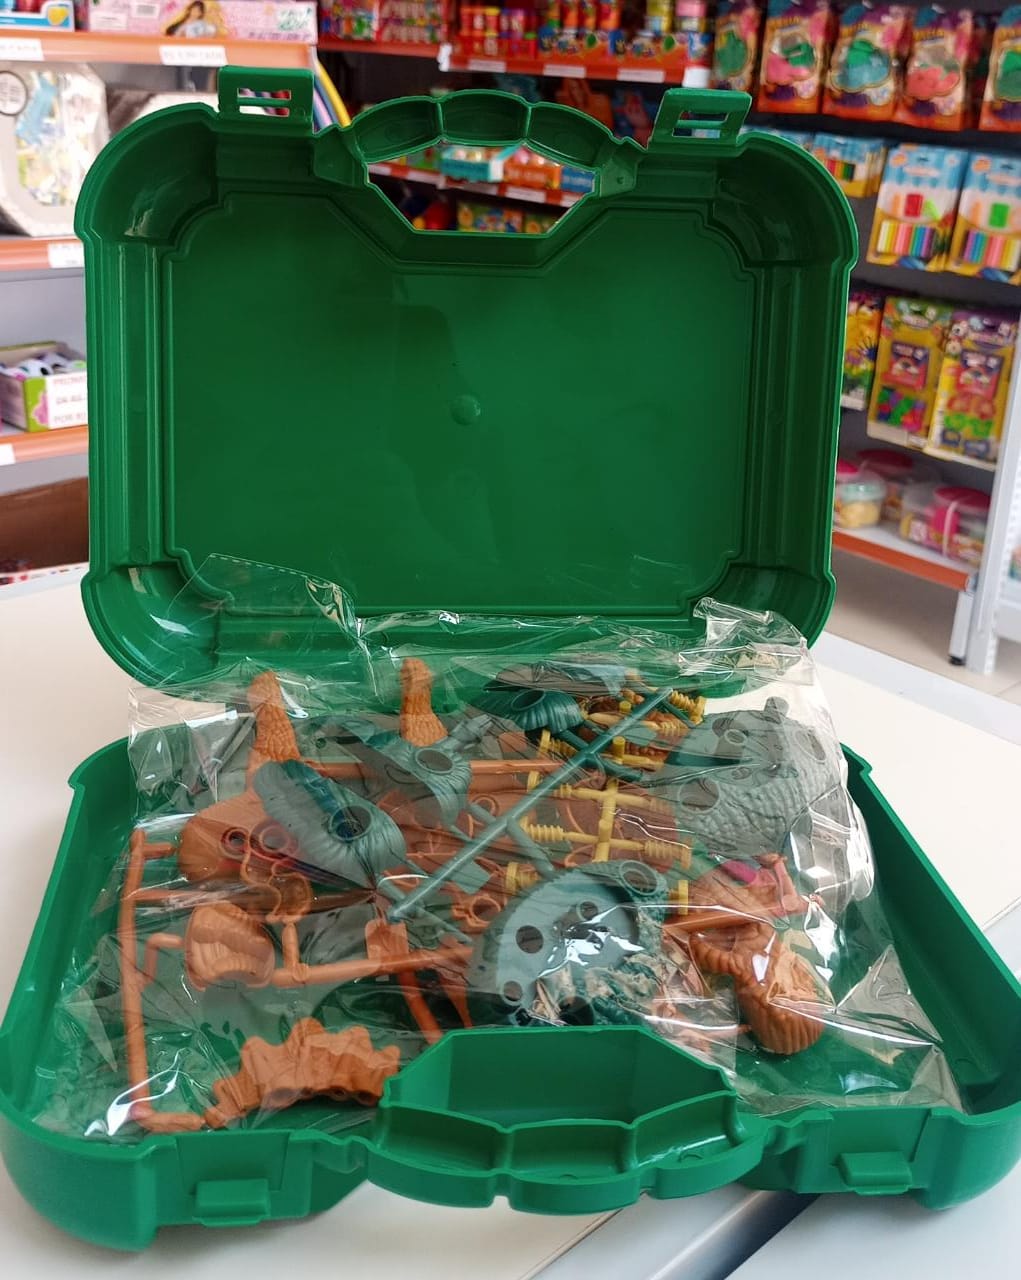 Maleta Monte seu Dino Jurassic - Majoca Colorê Brinquedos Educativos